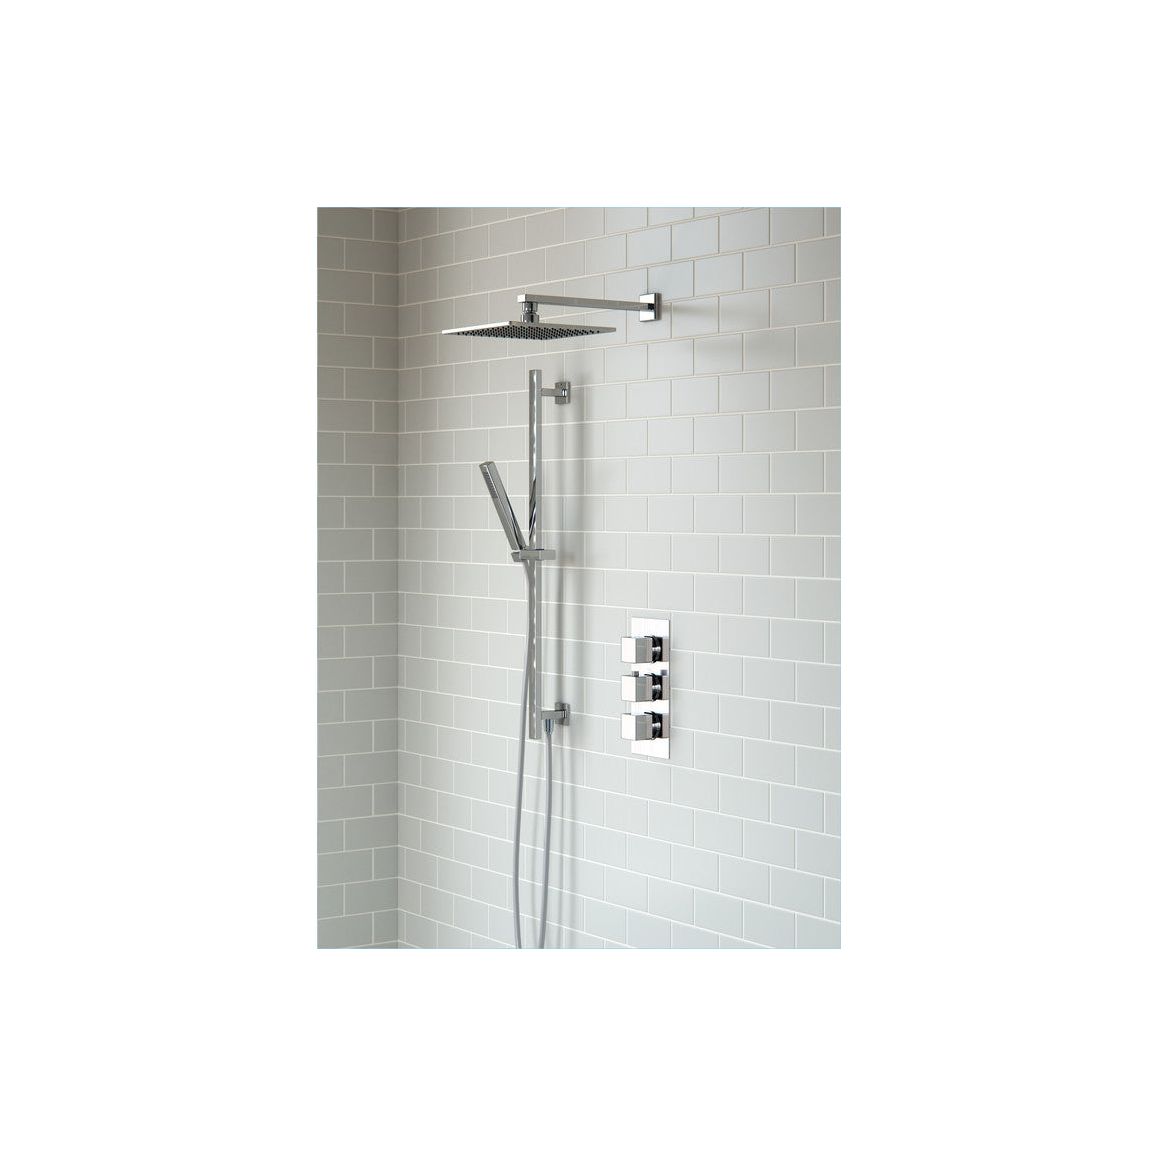 Eubank Shower Pack Three - Two Outlet Triple Shower Valve w/Riser & Overhead Kit